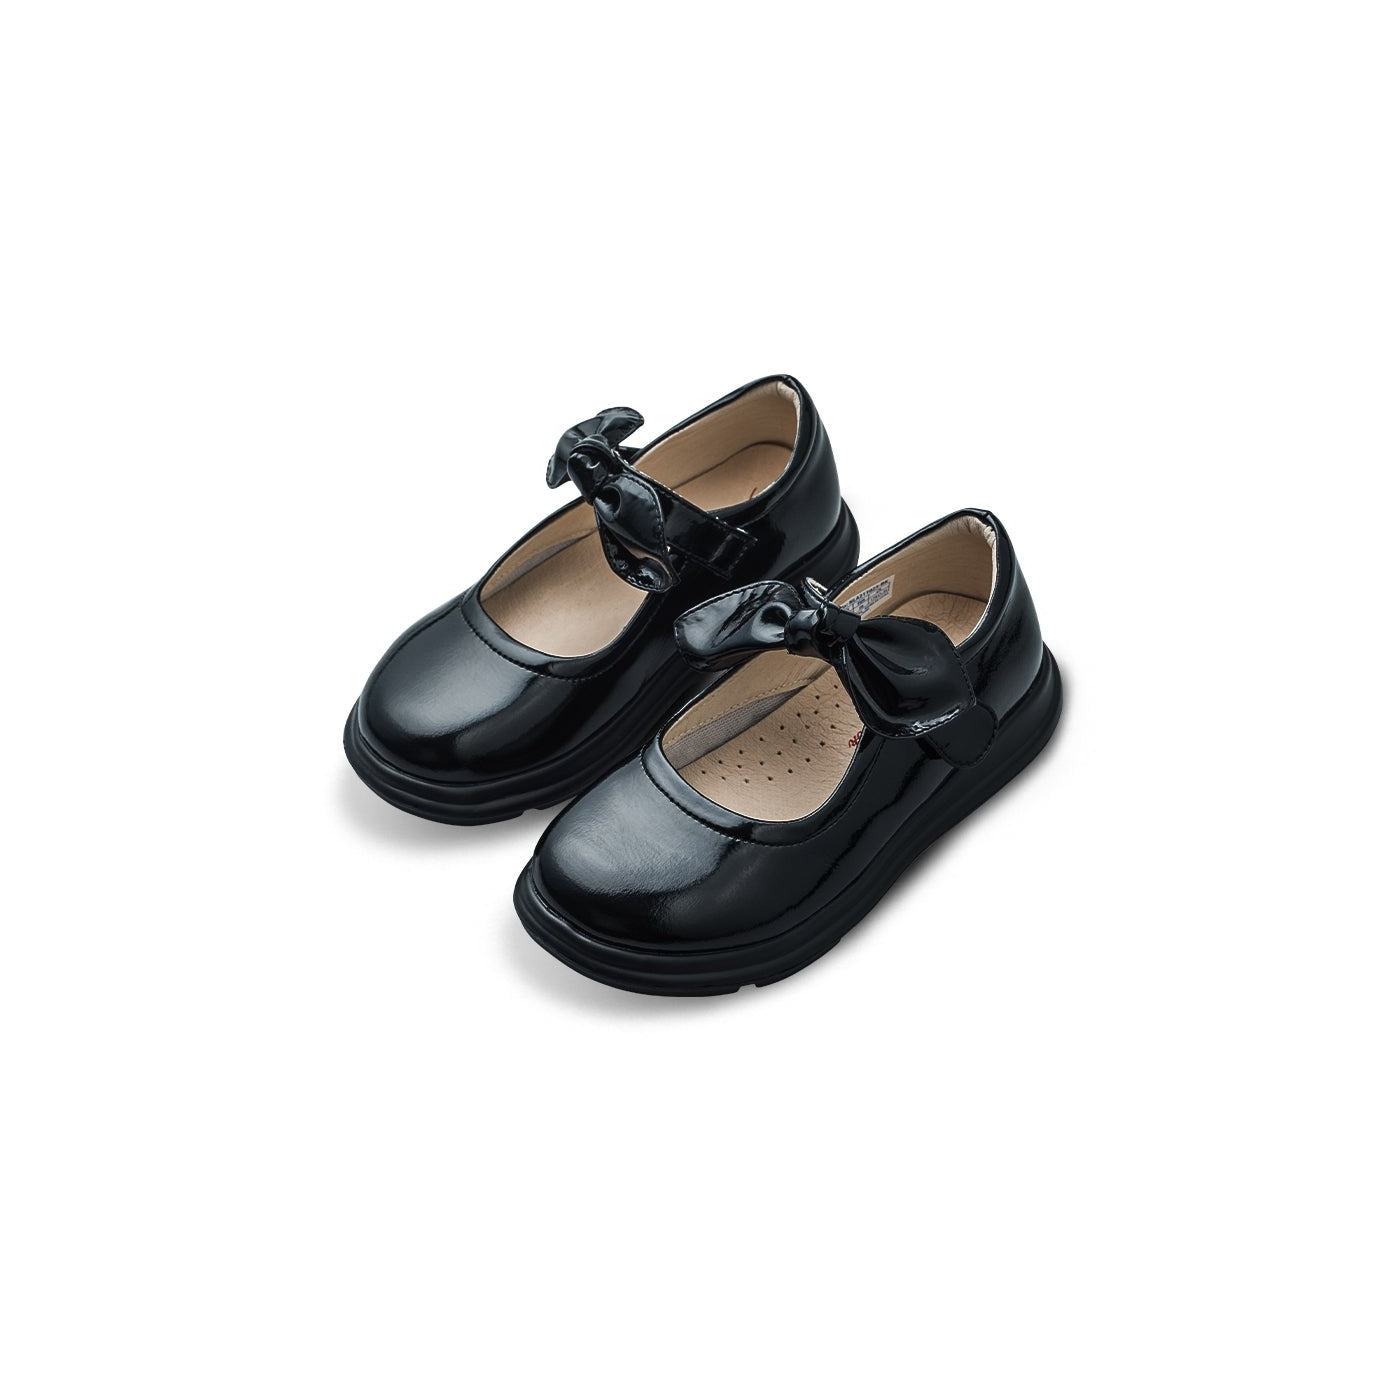 Pretty Bow Soft Sole Girl Patent Black School Shoes - 0cm